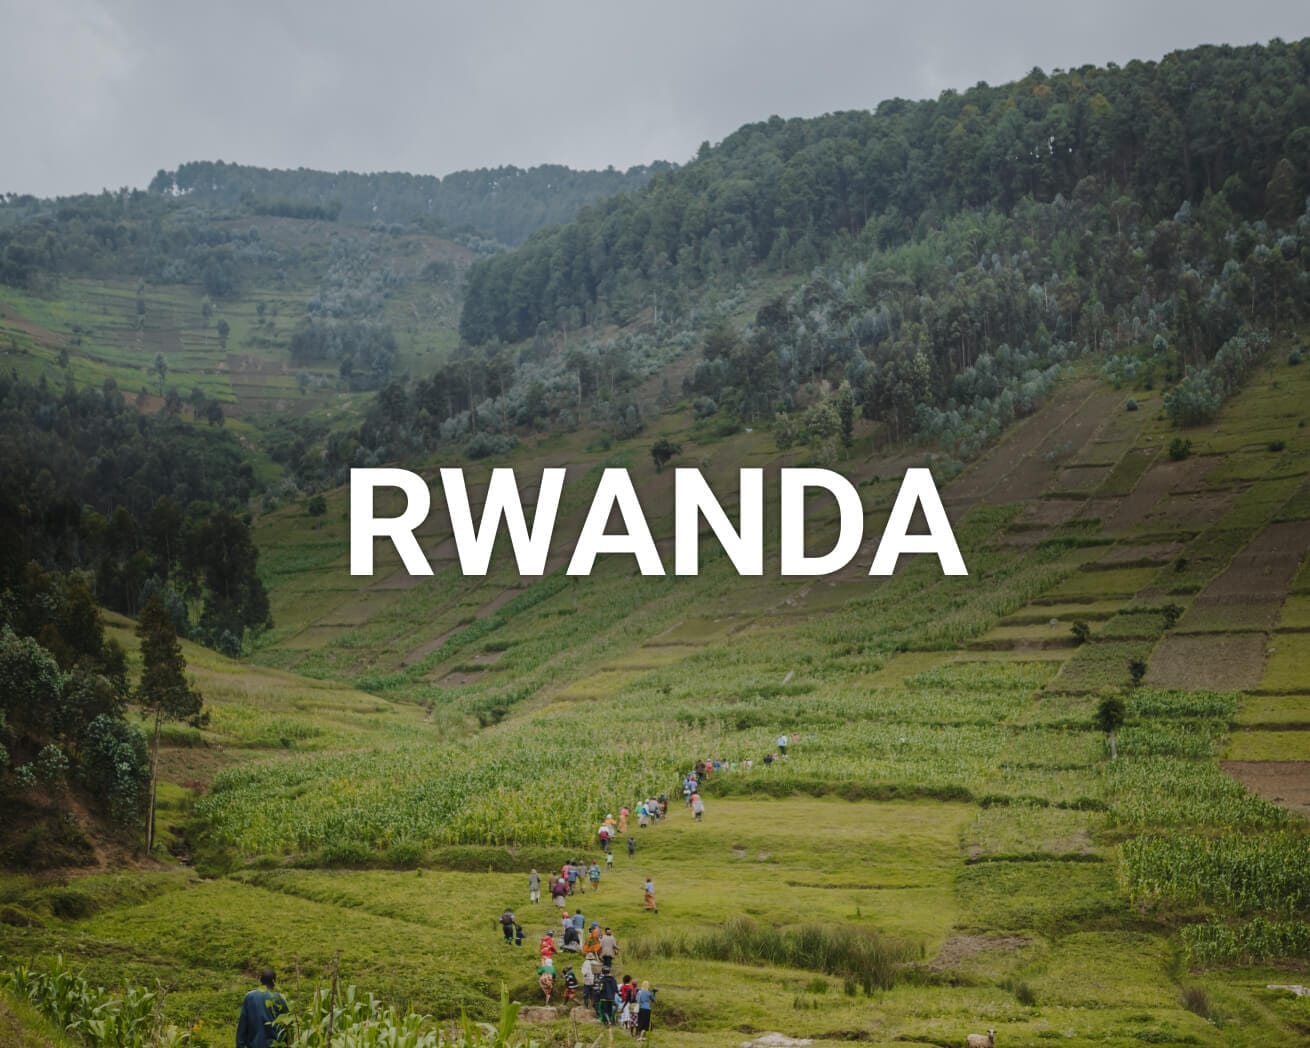 Rwanda hills and trees